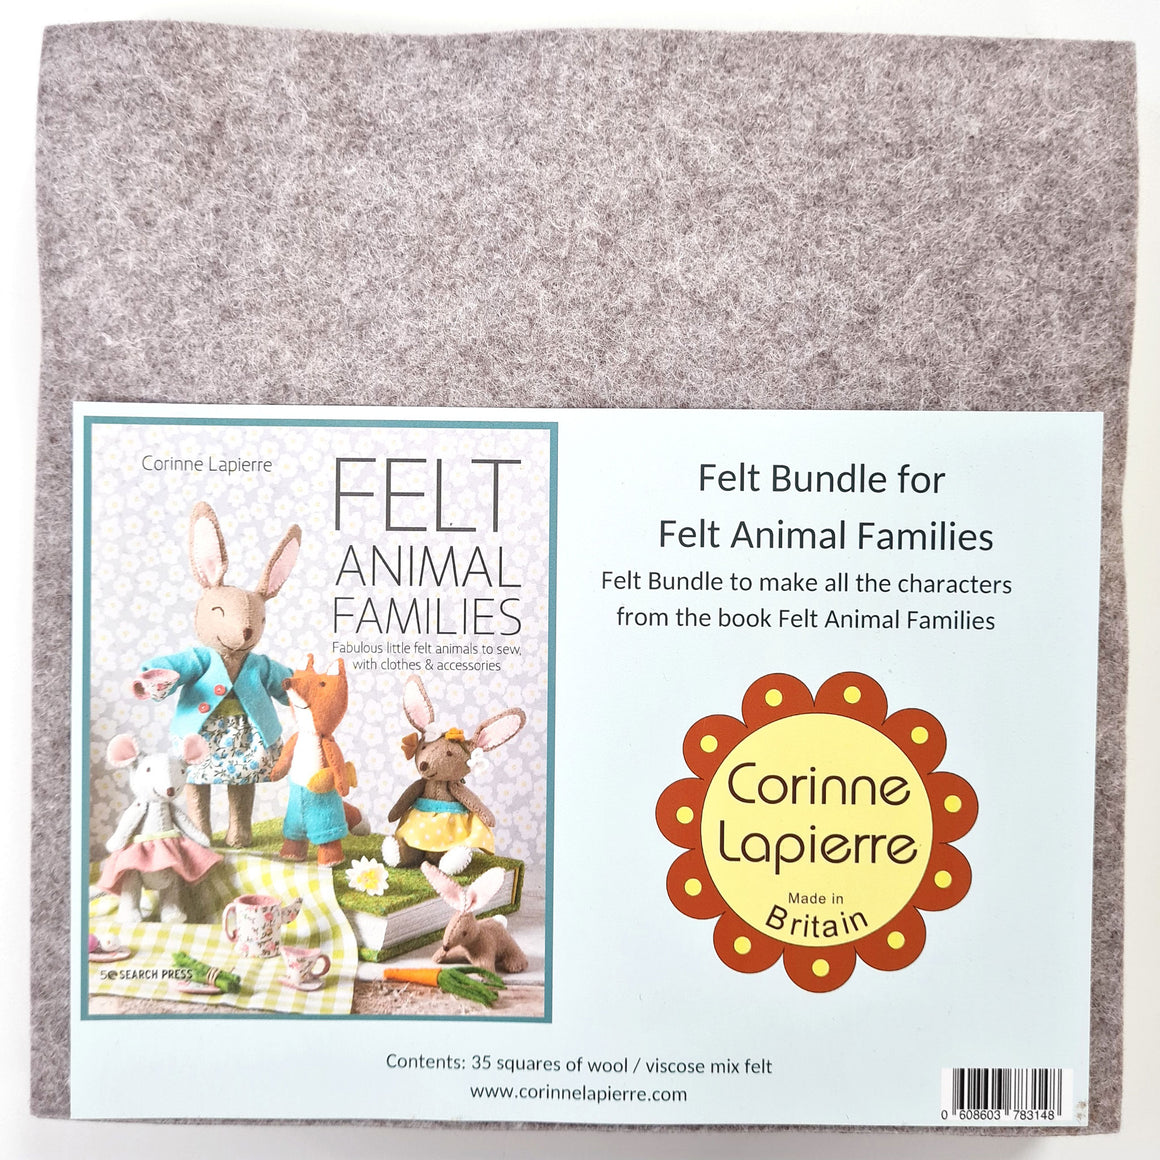 Corinne Lapierre Felt Bundle for felt animal families Book. Image, pack of felt with light blue label and Corinne Lapierre logo.